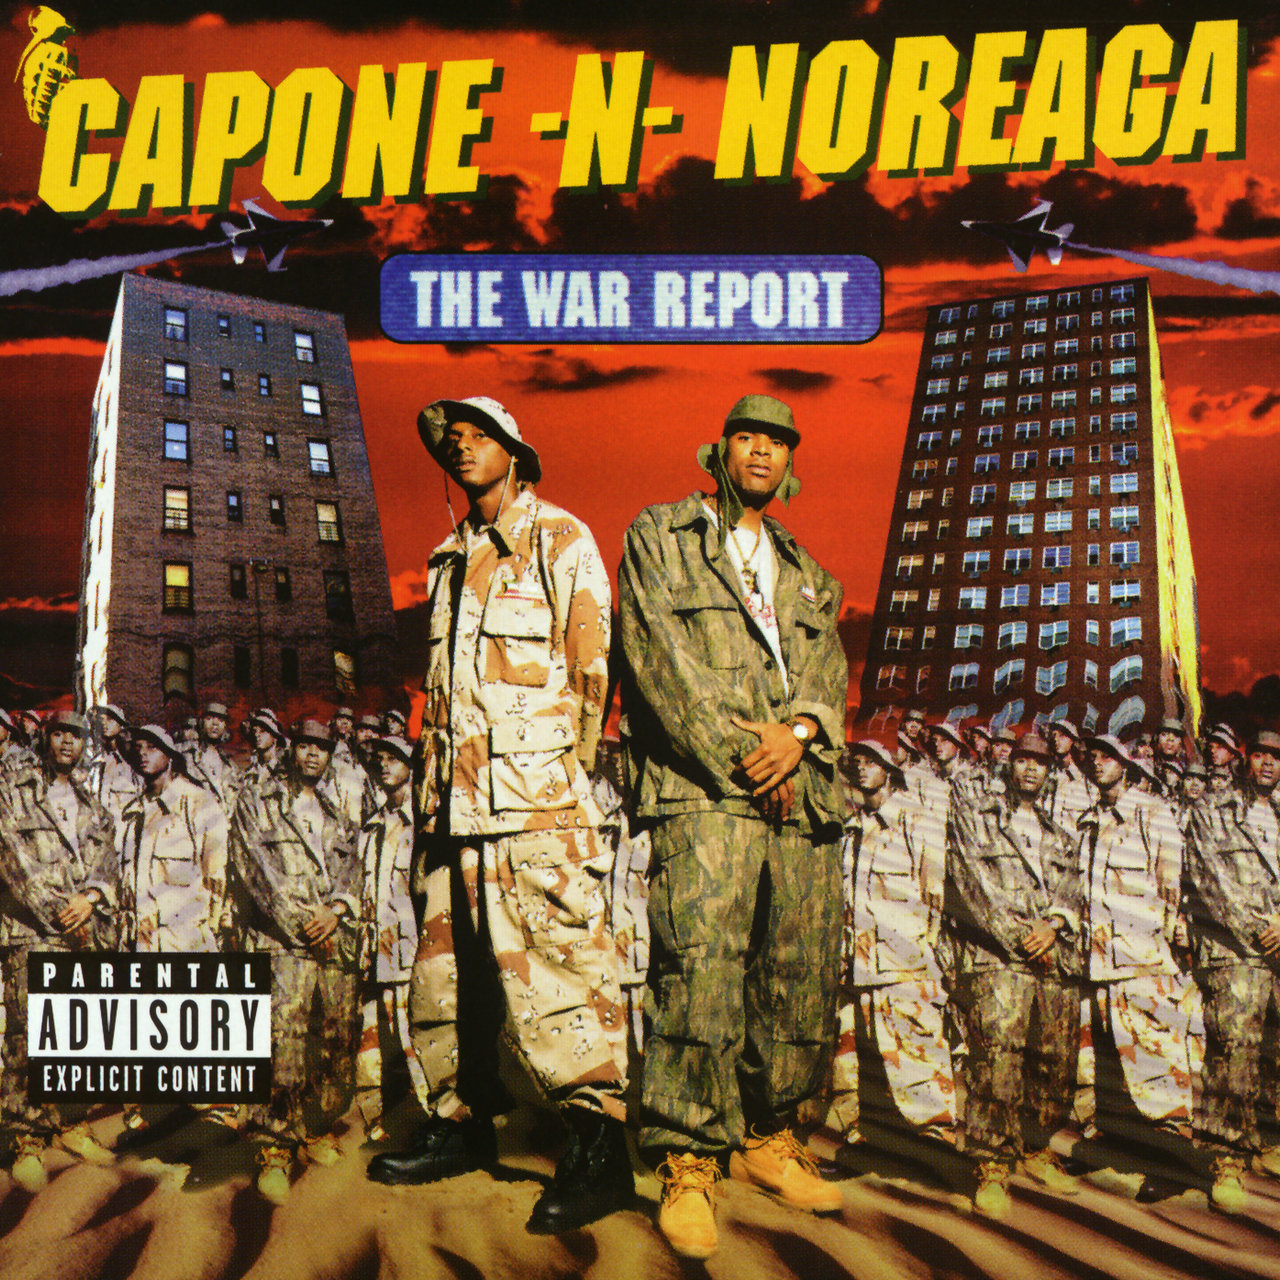 Capone-N-Noreaga - The War Report (Cover)